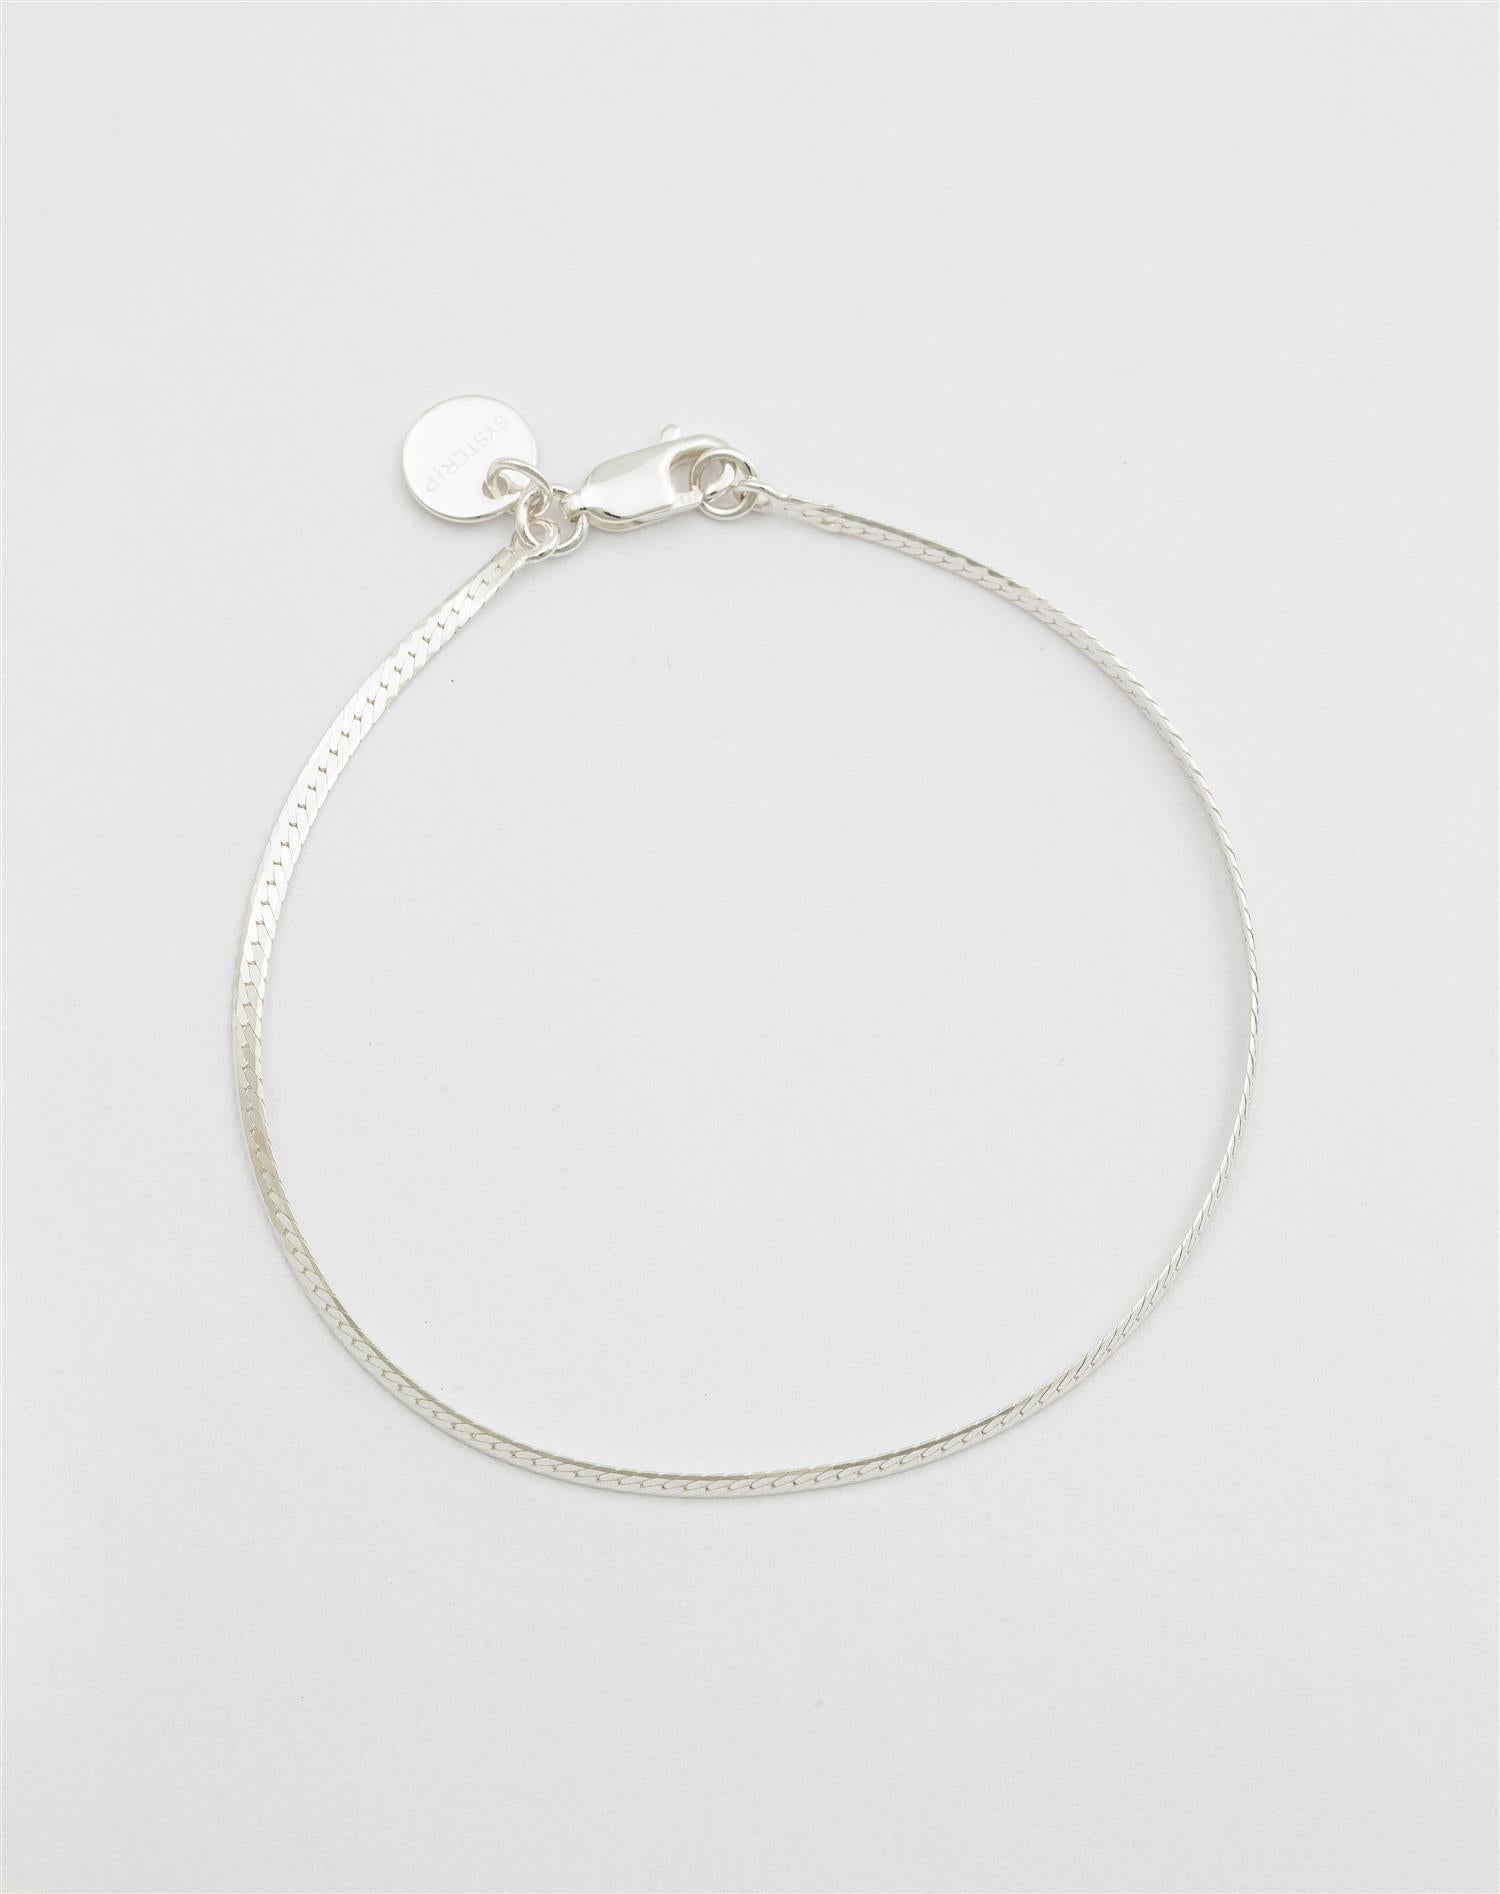 SYSTER P Herringbone Bracelet,str.M/L Sølv